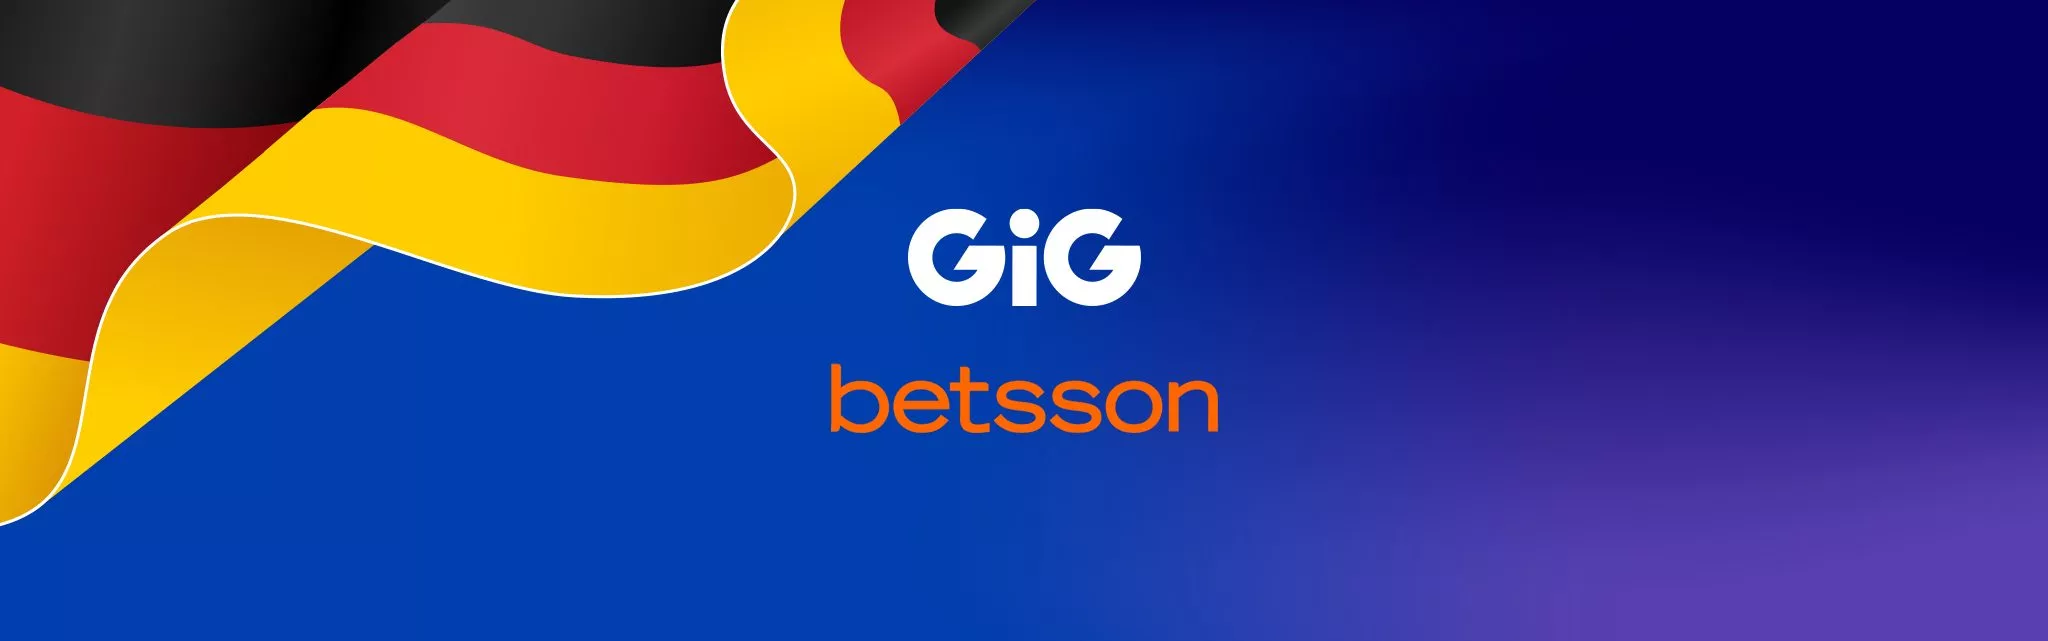 gig-betsson-partnership-logos